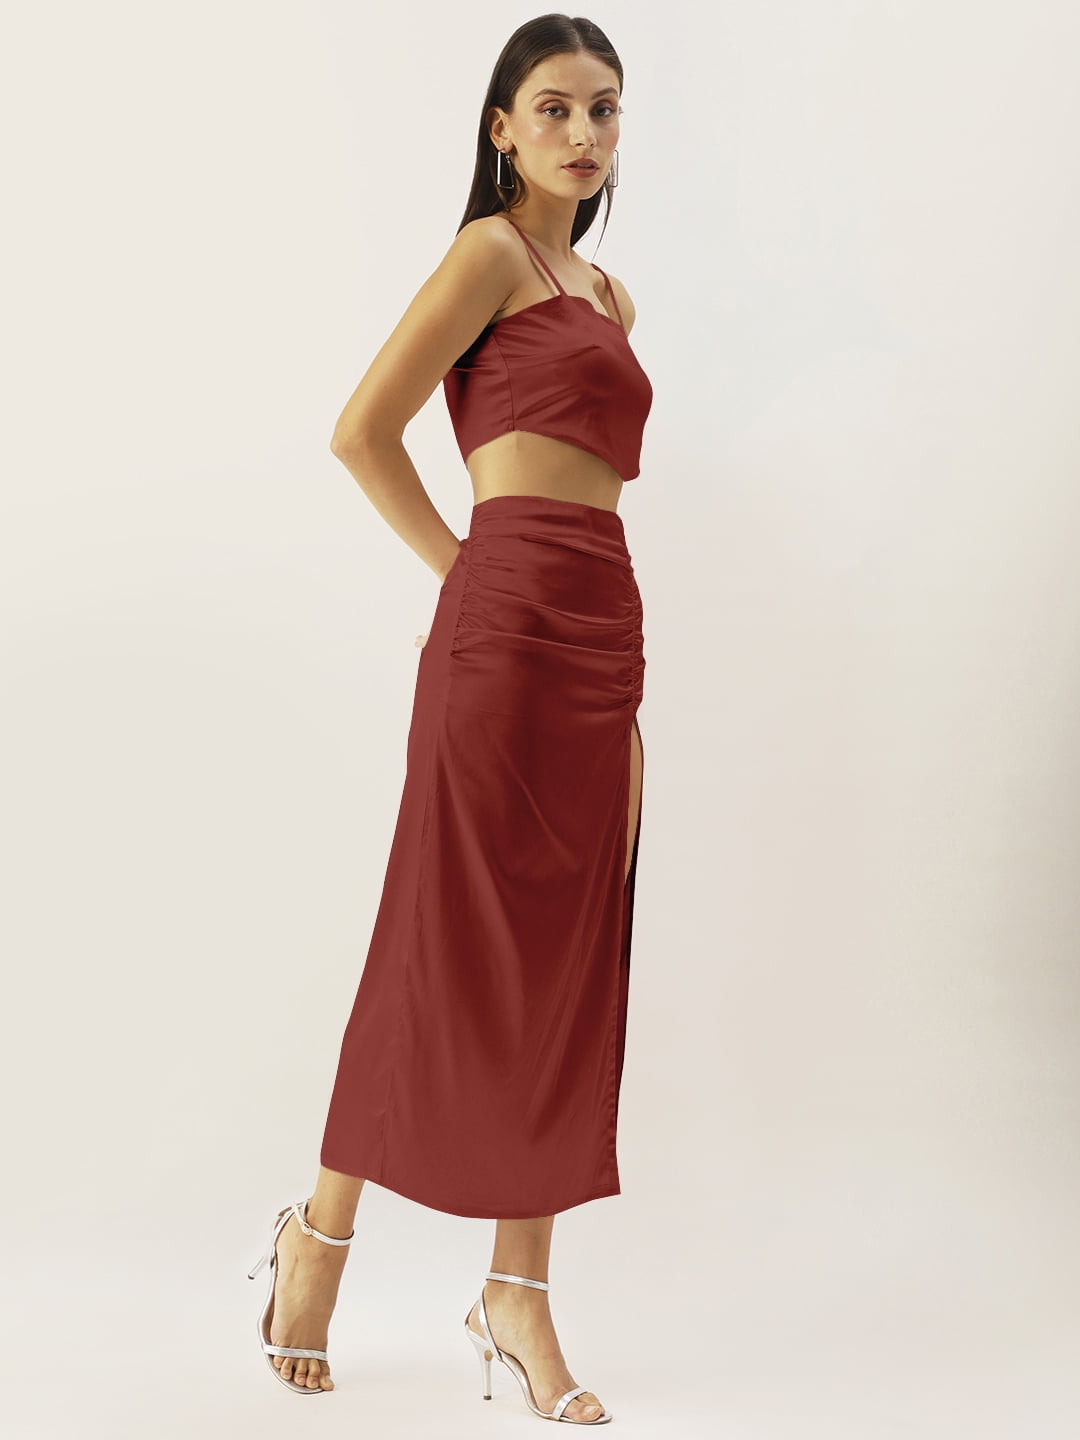 DressBerry Women's Solid Satin Knee Length 2 PCS Skirt Blouse Set Spaghetti  Straps Shoulders Sleeveless High Rise Square Neck Western Style 